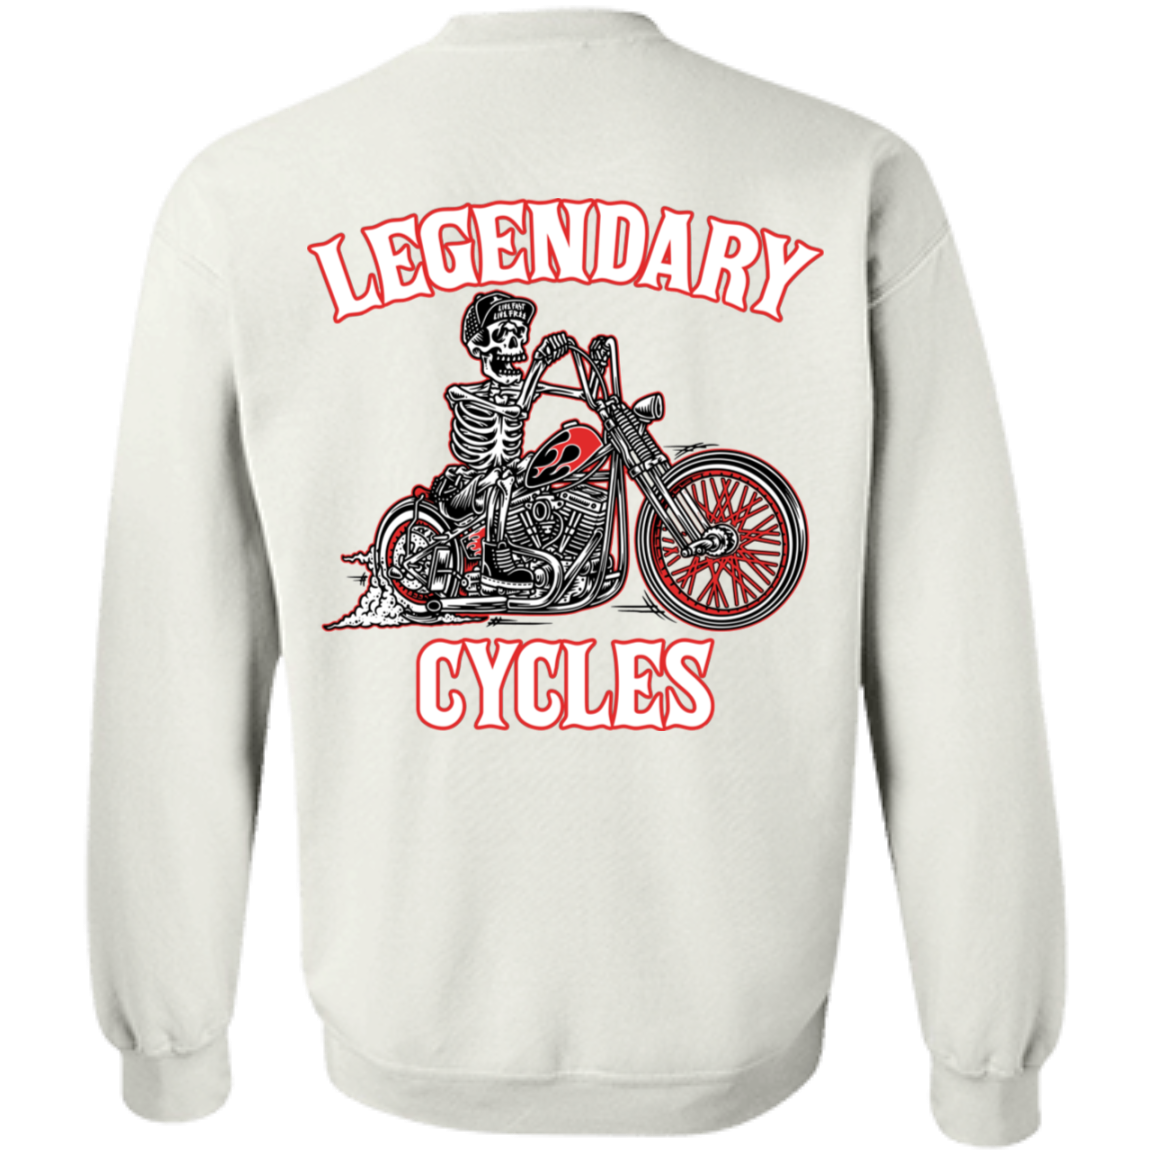 Legendary Cycles Logo Crewneck Pullover Sweatshirt